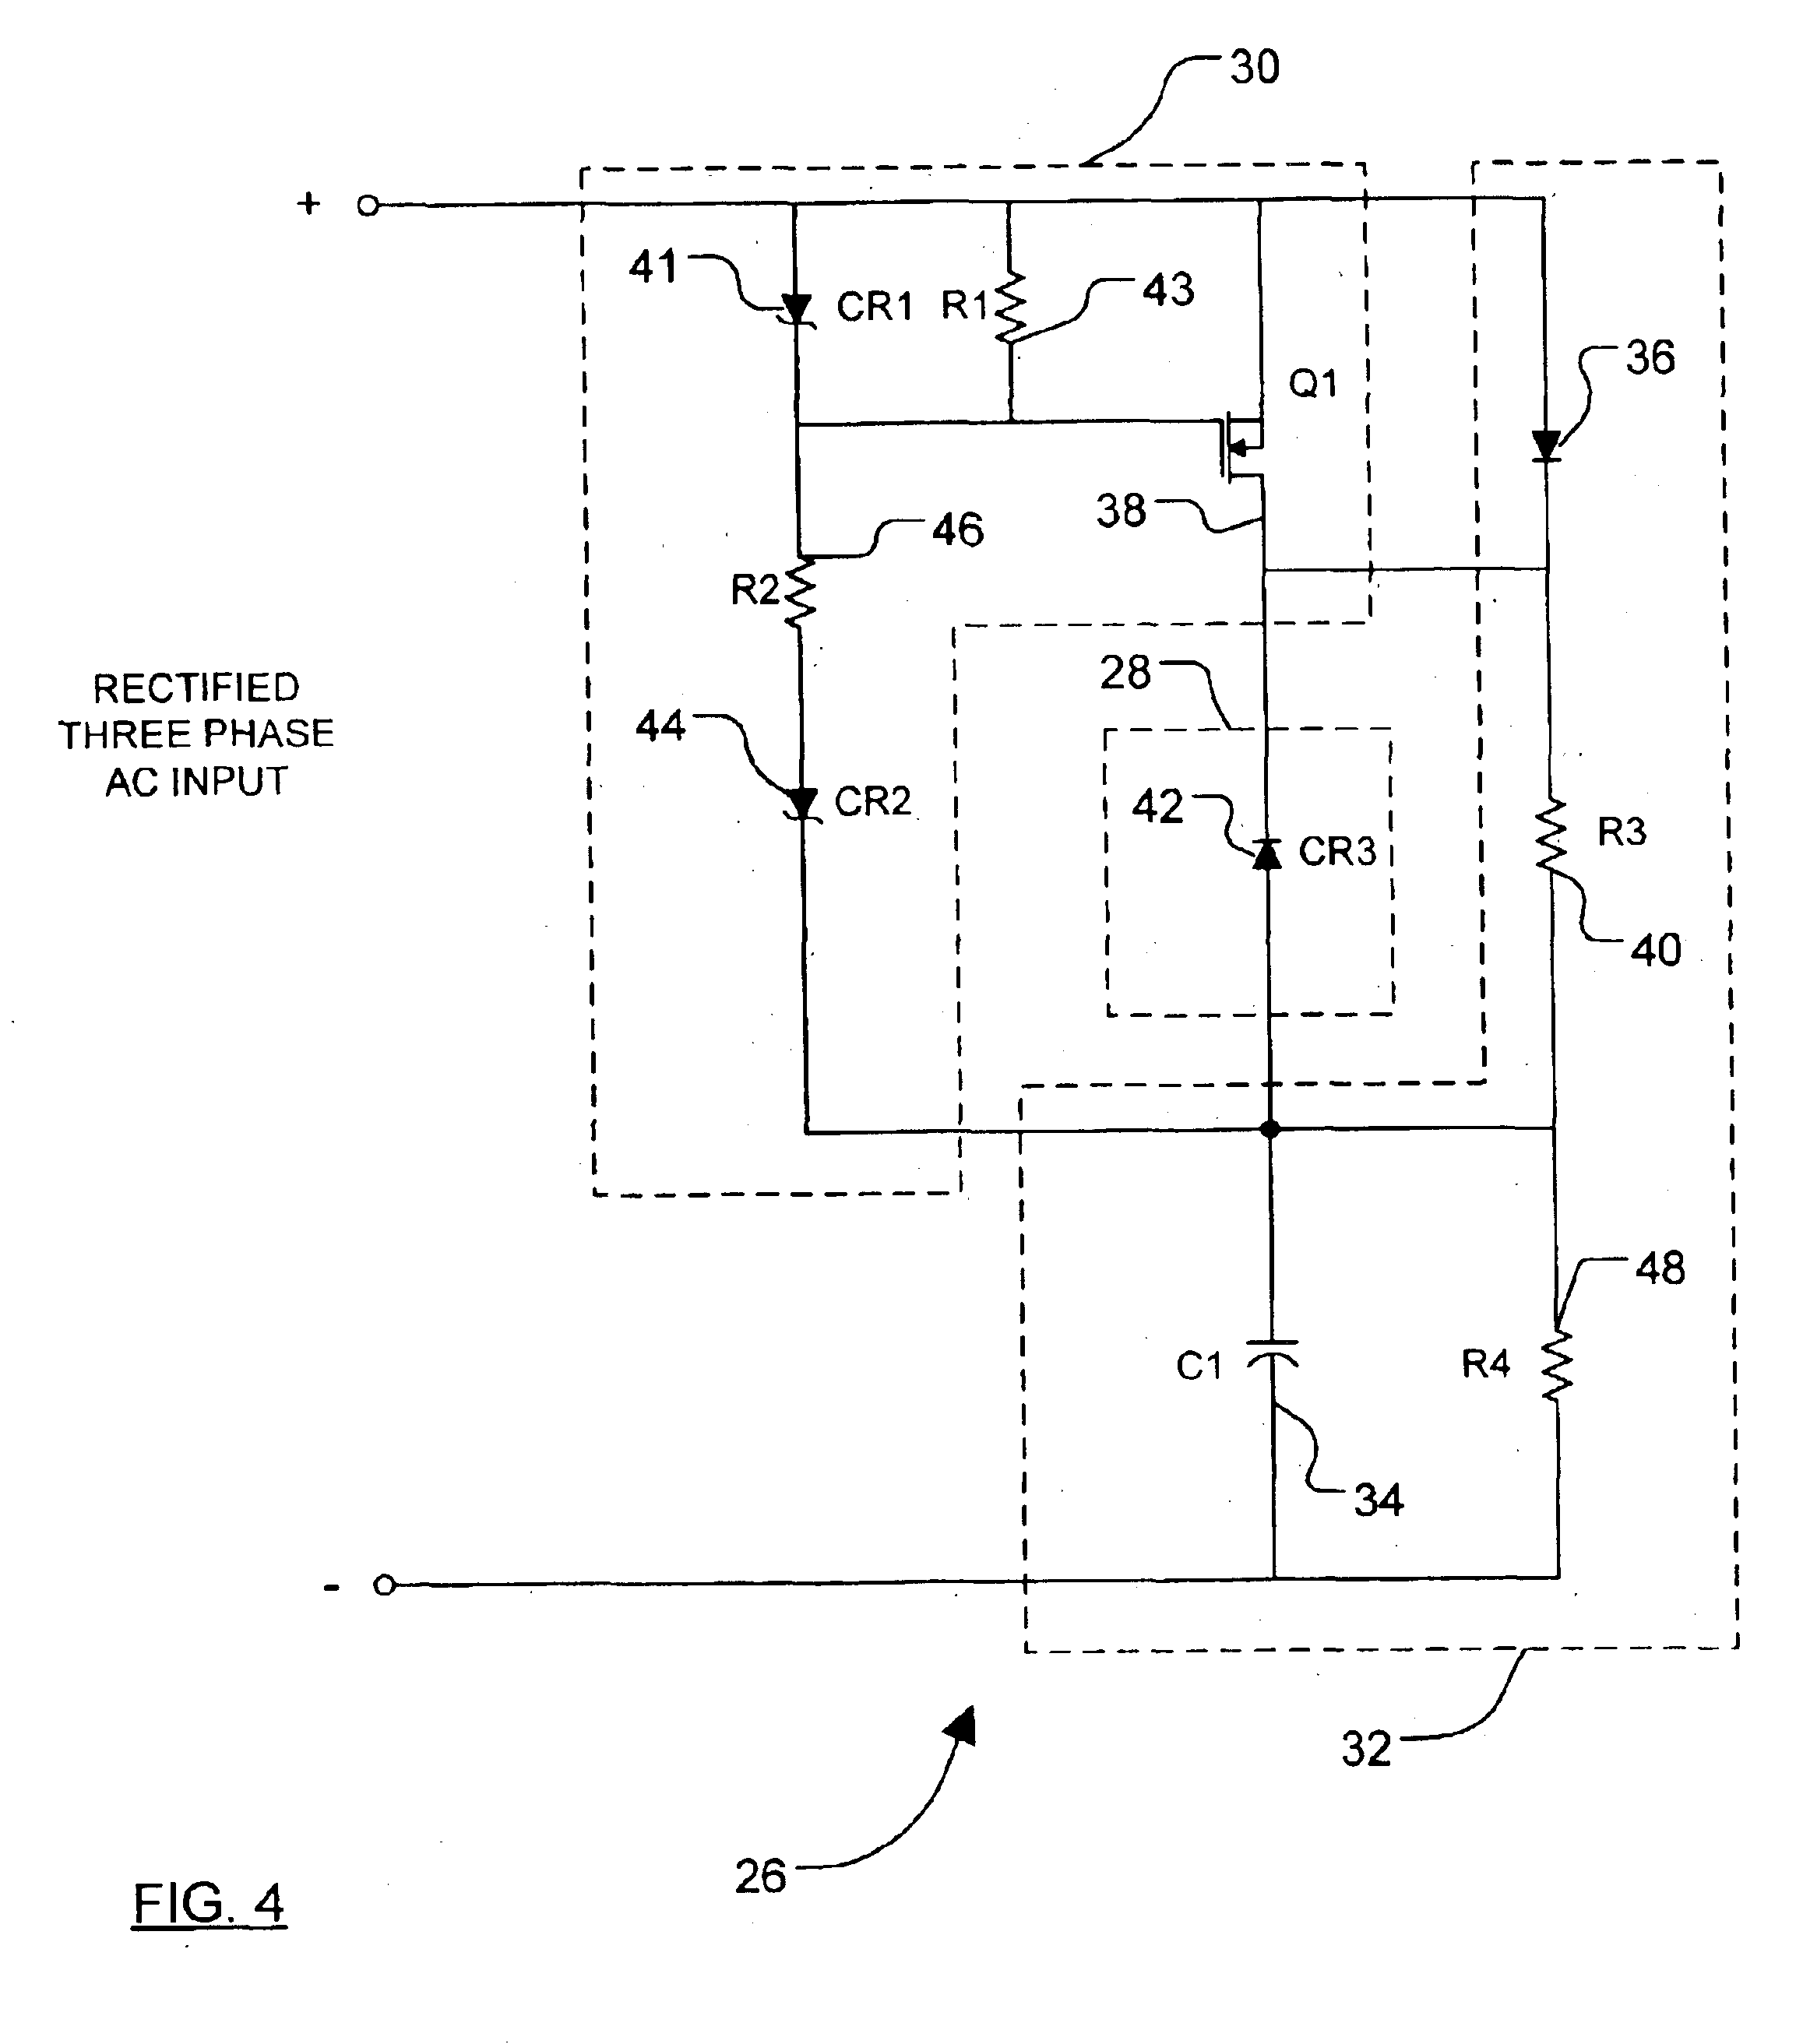 Power holdup circuit